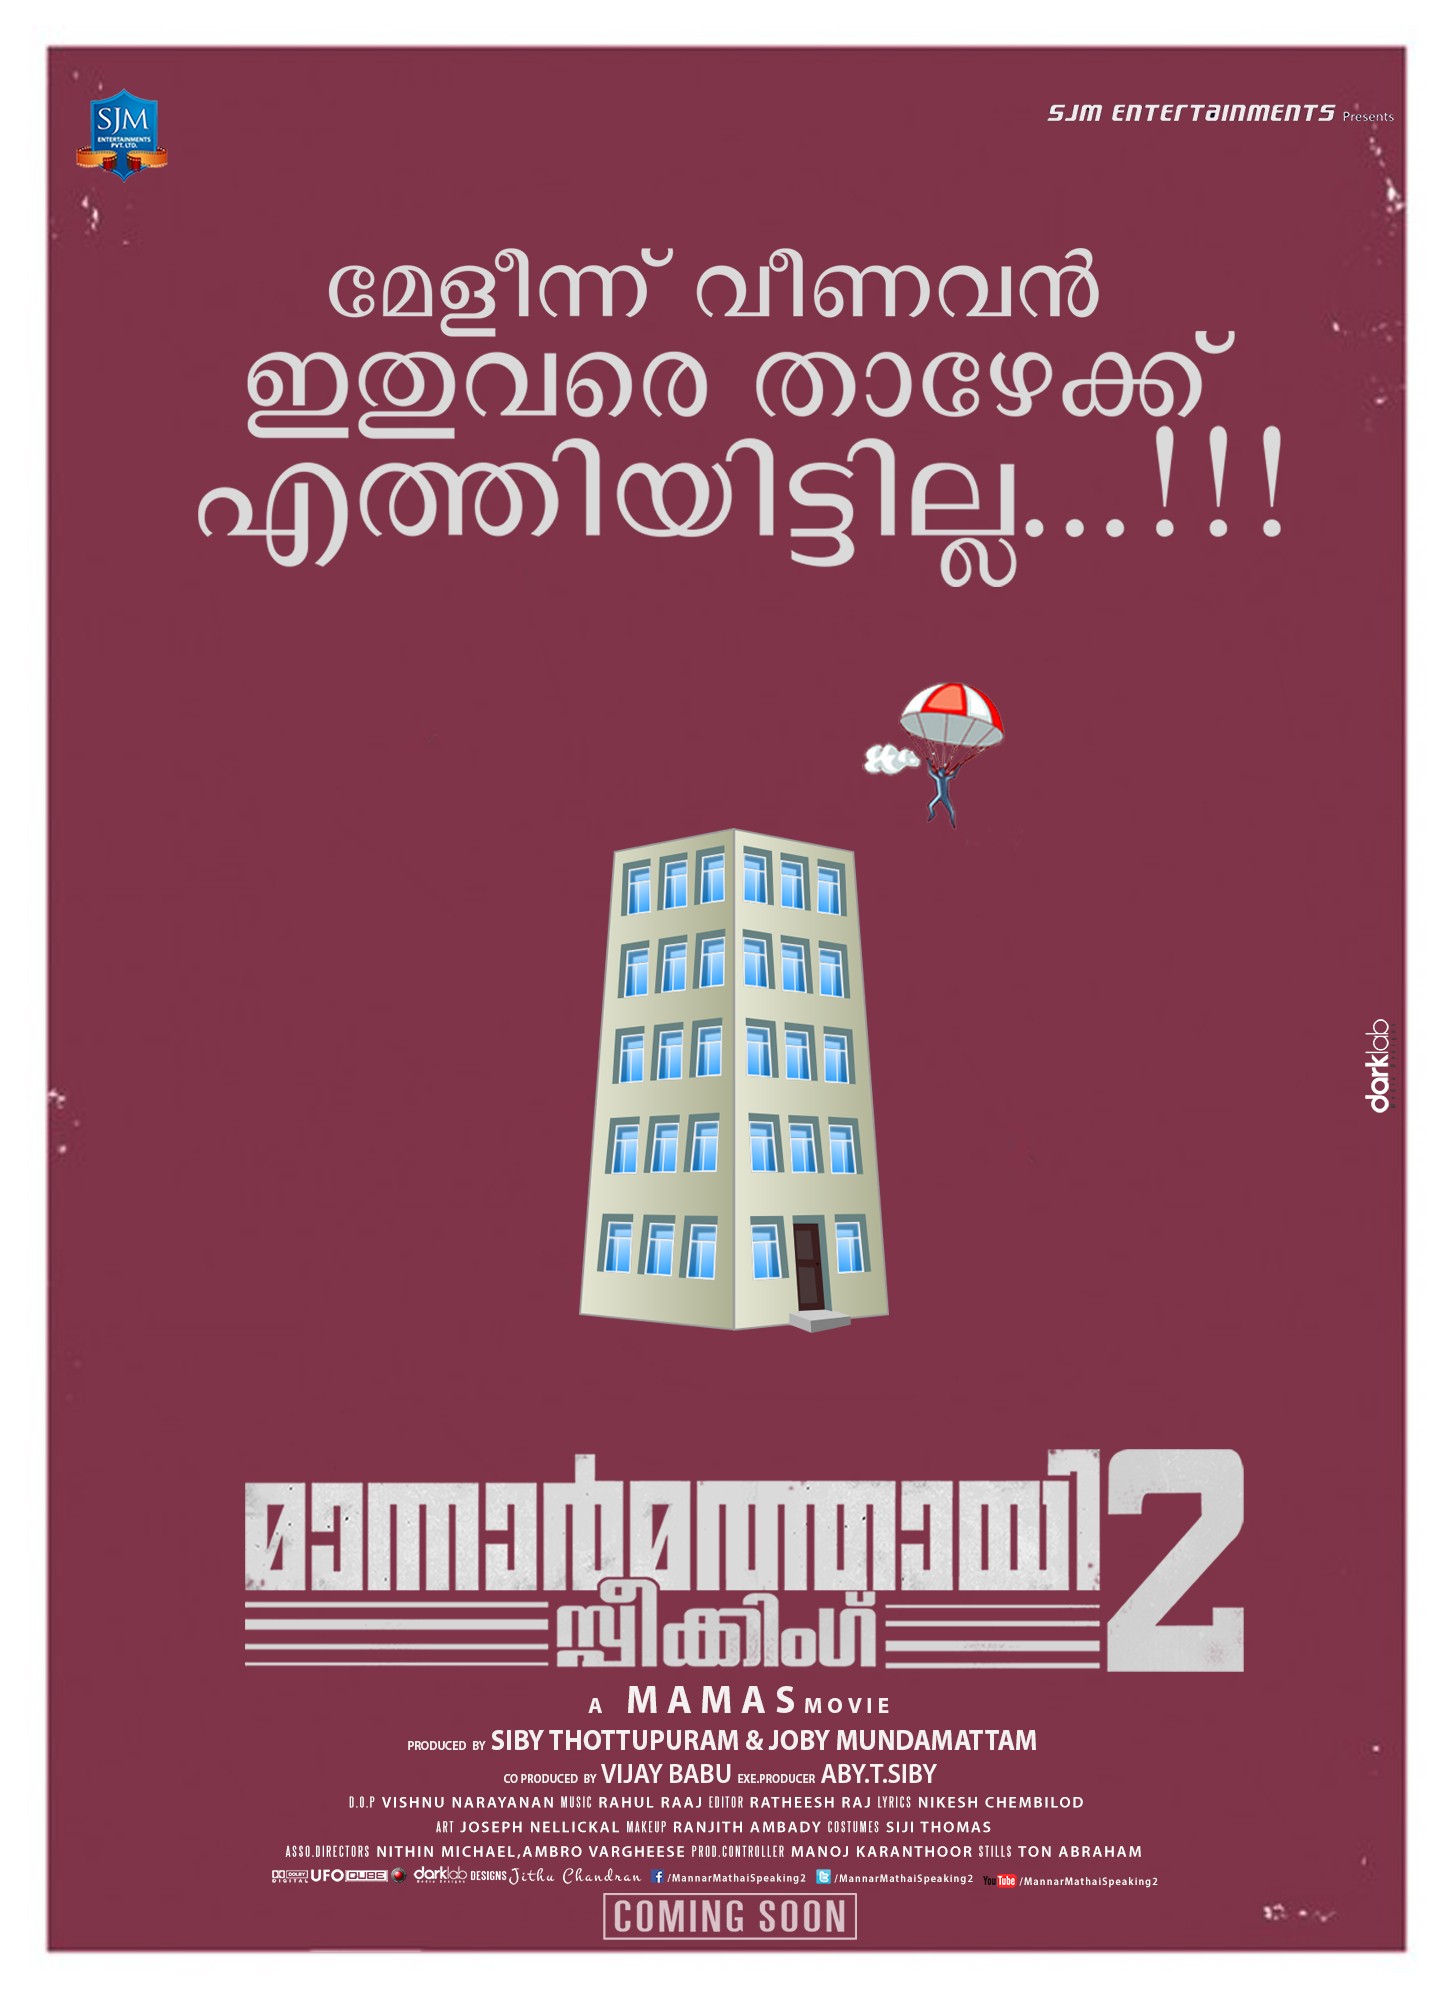 Mega Sized Movie Poster Image for Mannar Mathai Speaking 2 (#10 of 29)